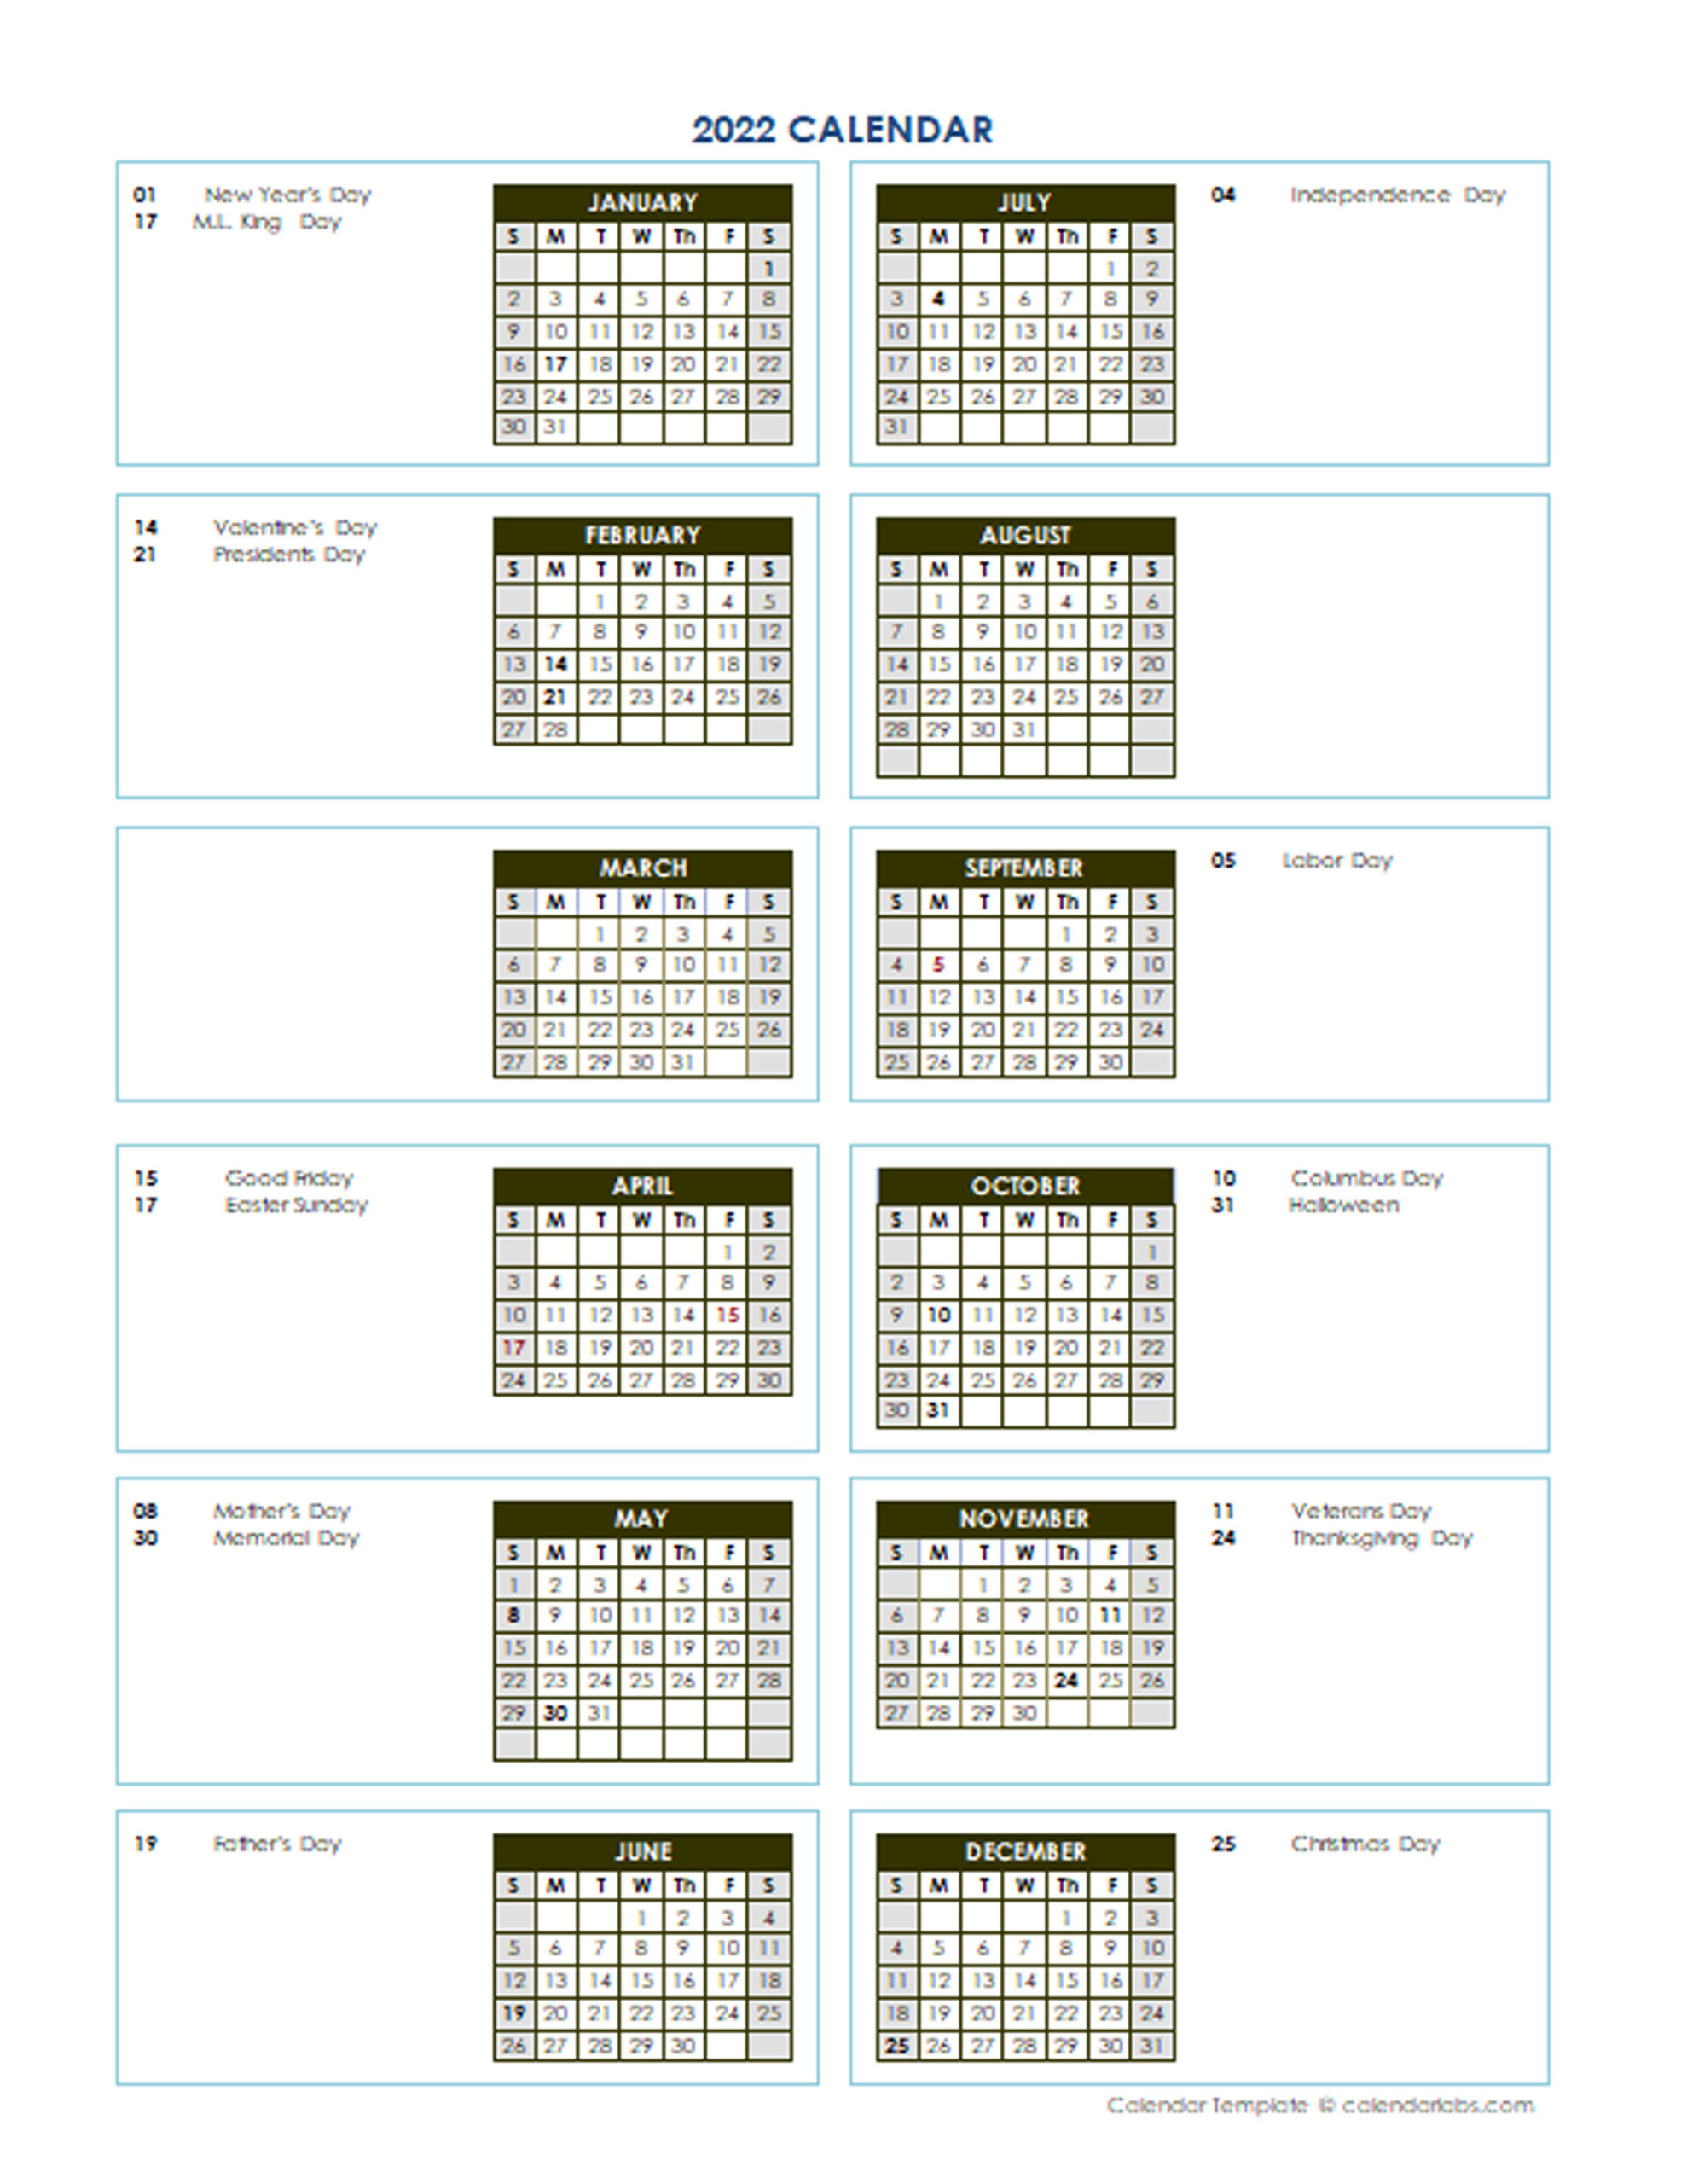 2022 Annual Calendar Vertical Template - Free Printable  2022 Printable Calendar Vertical With Holidays